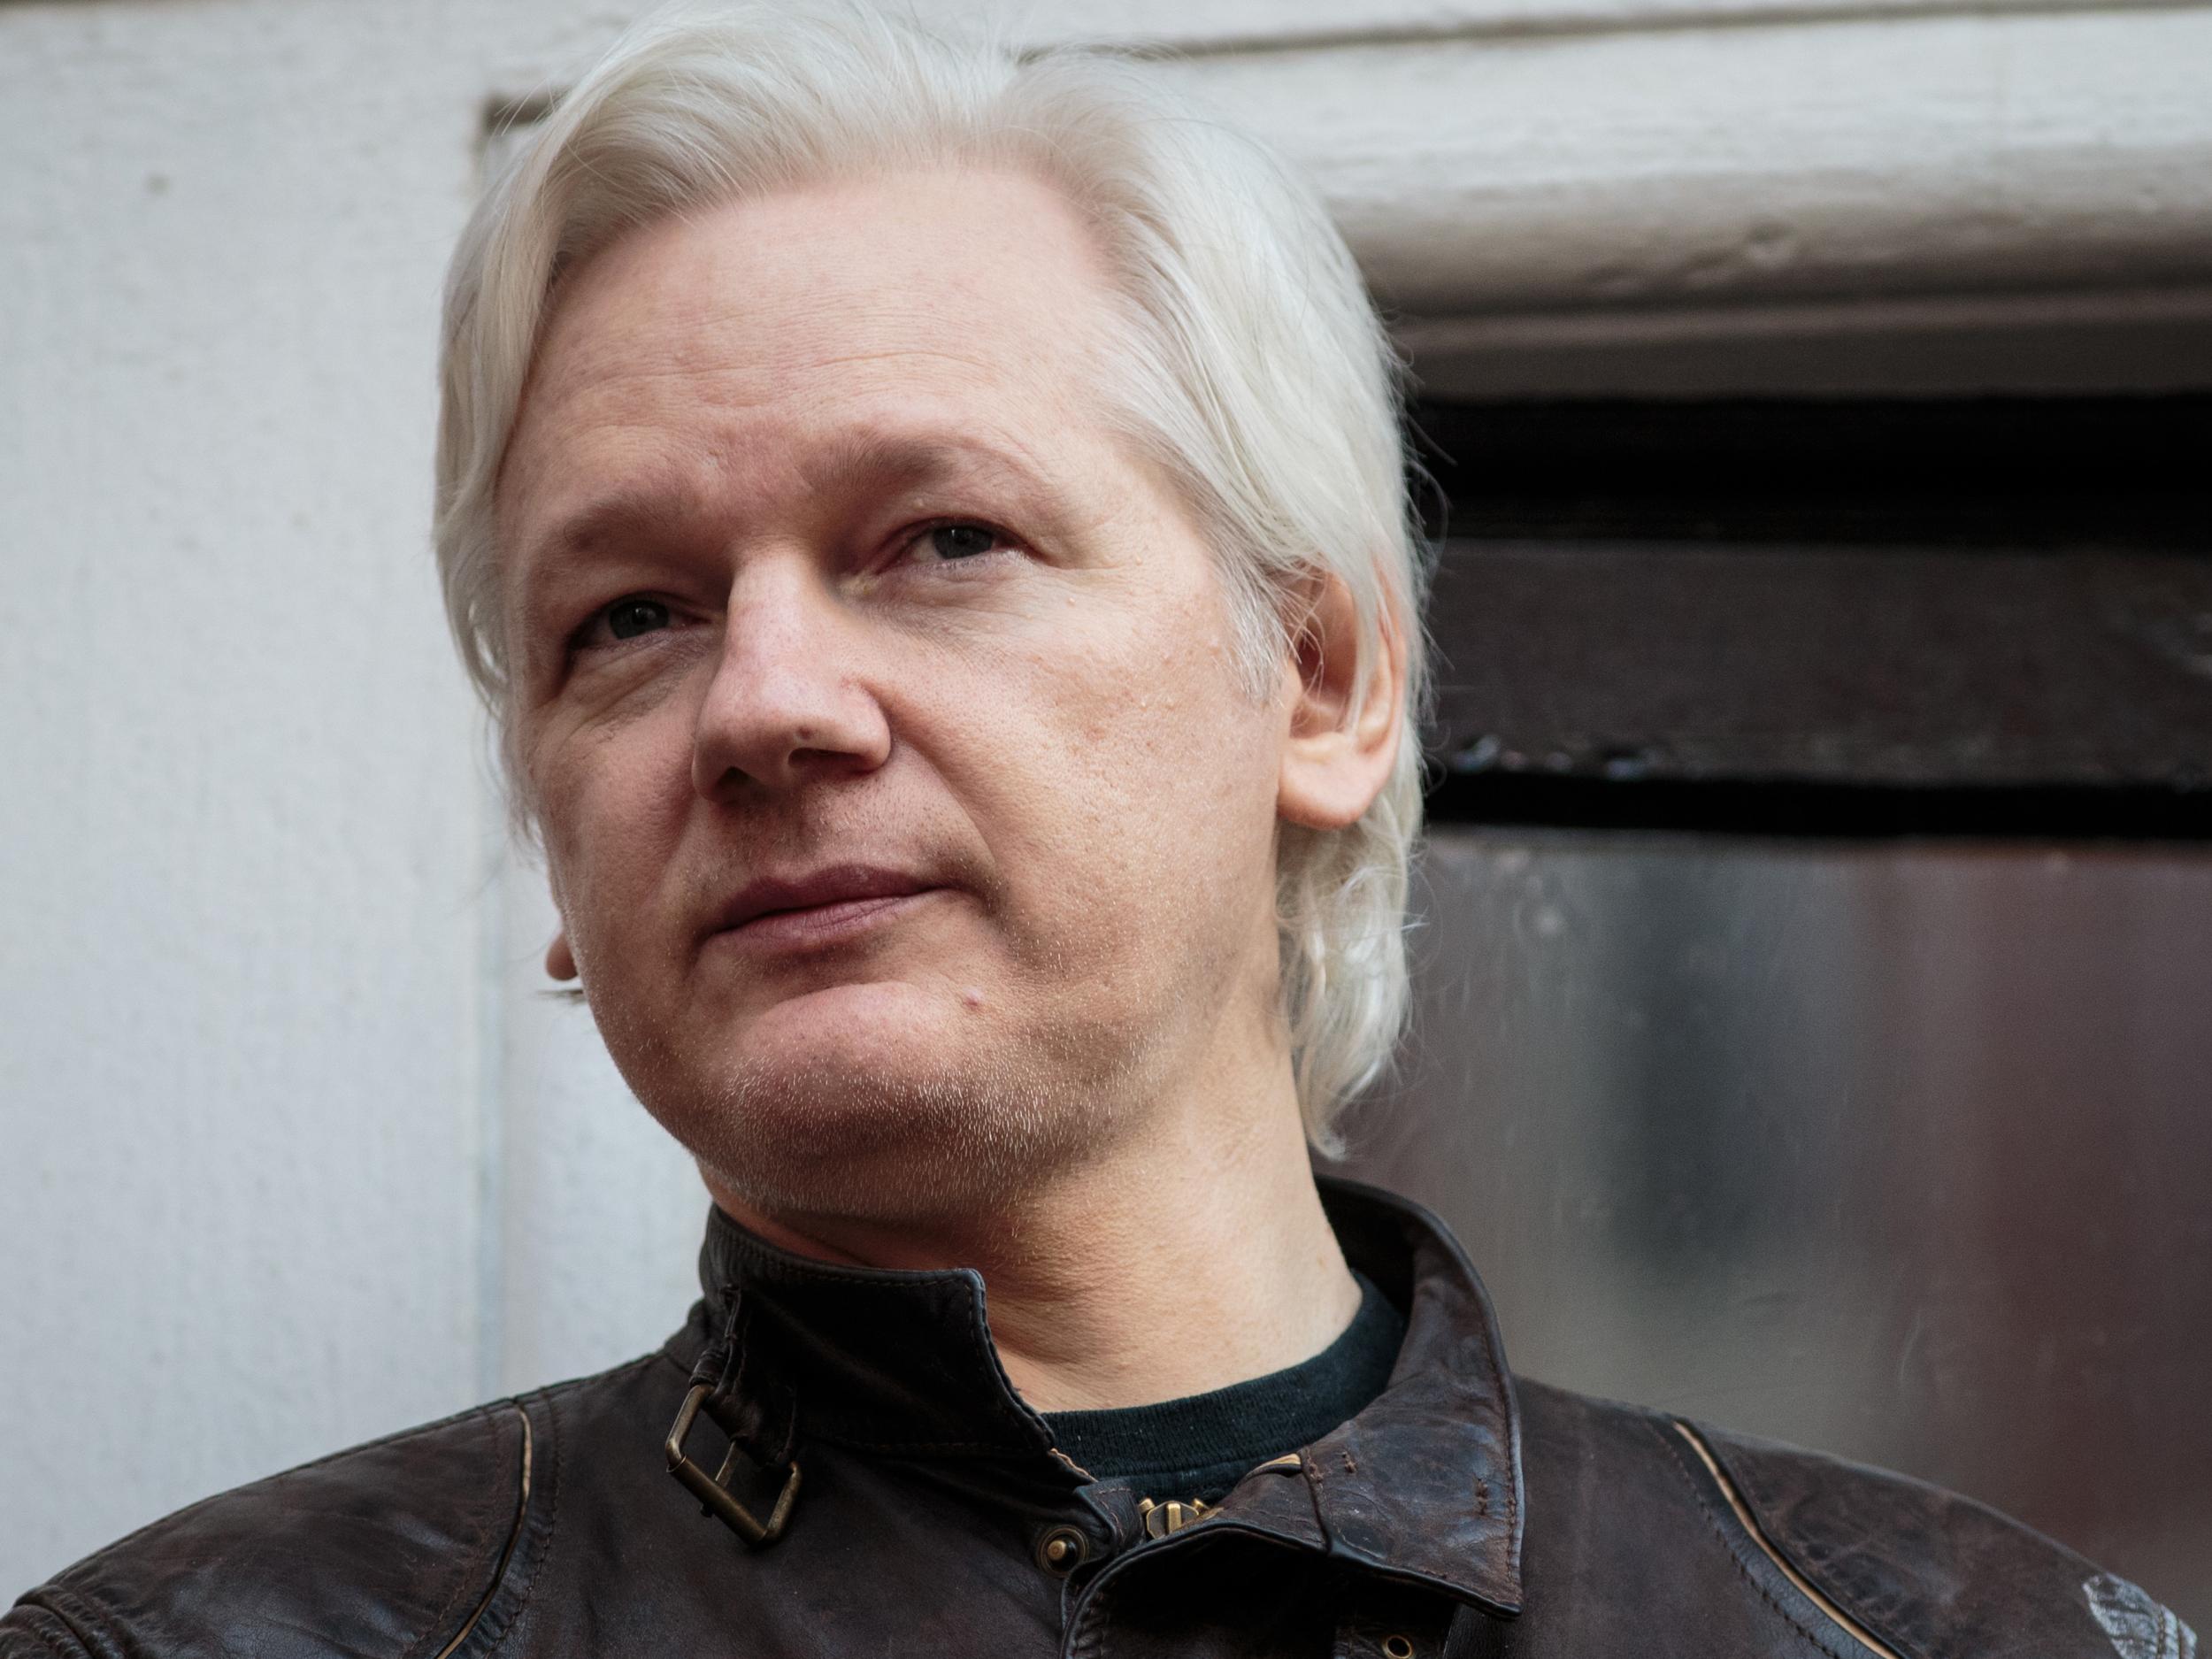 Assange has been living at the Ecuadorian embassy since June 2012